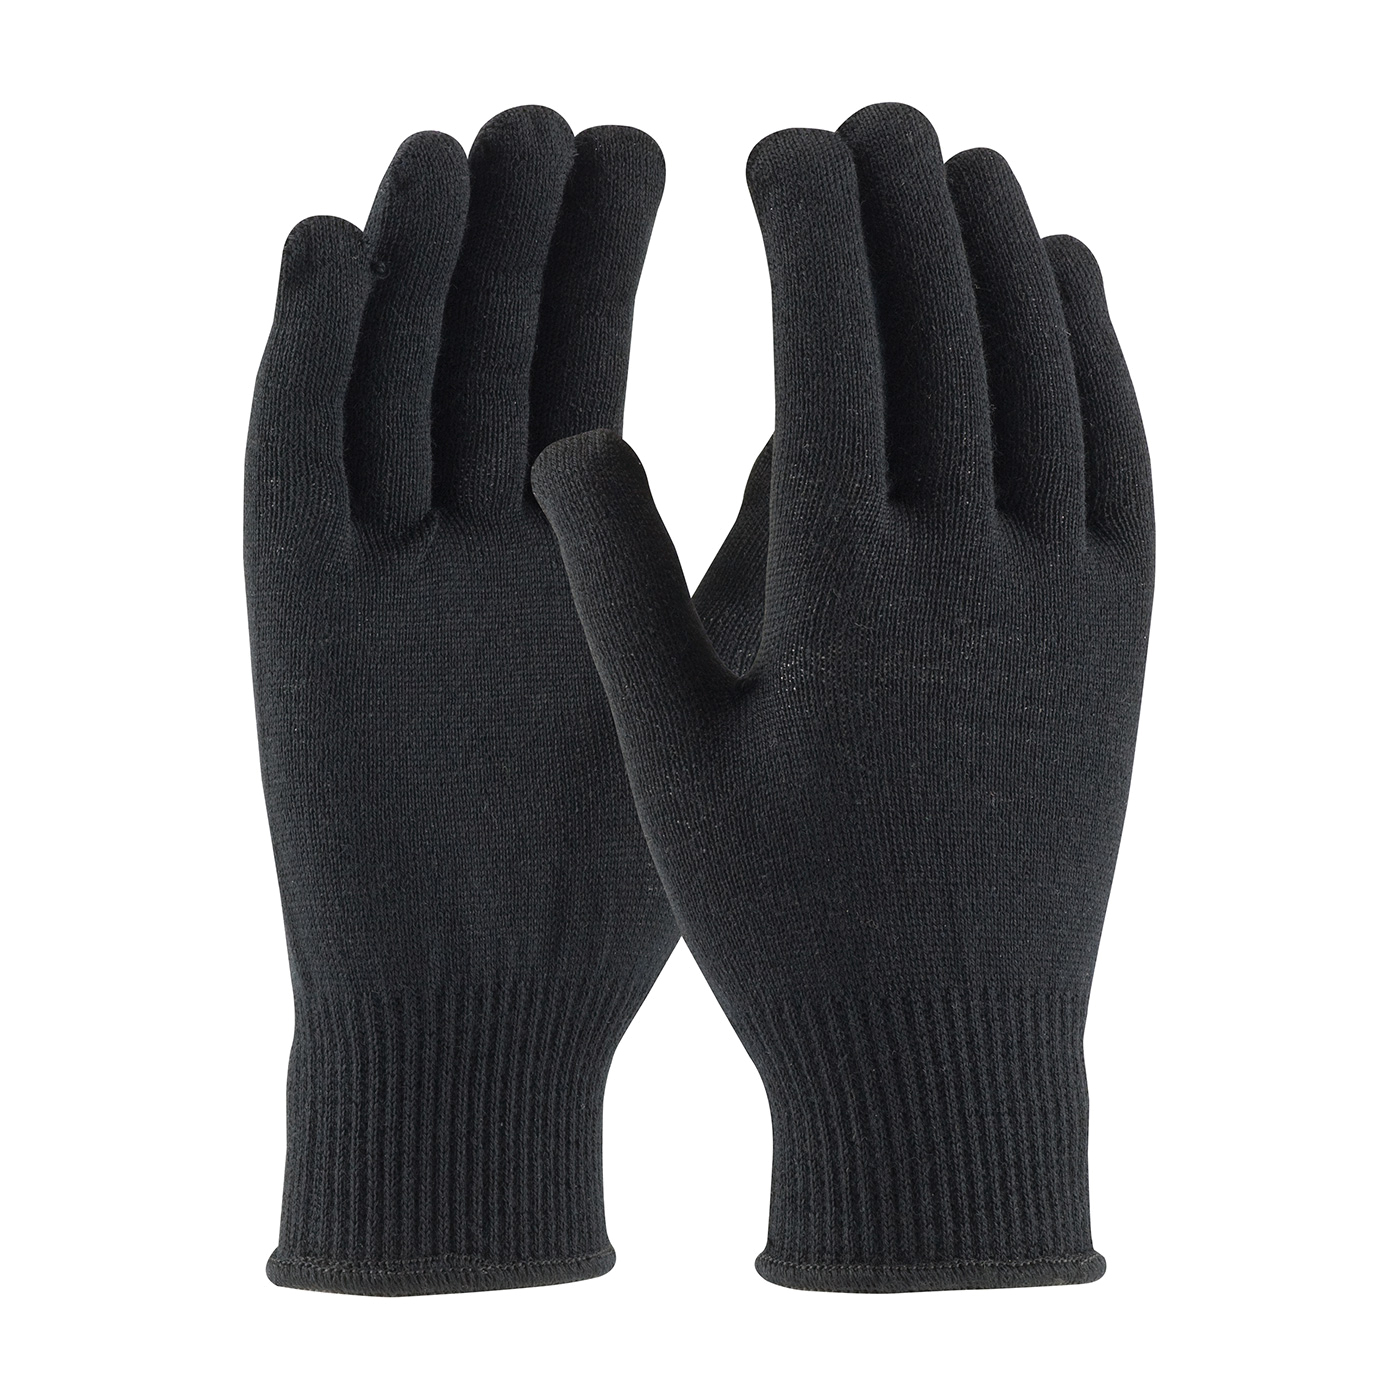 PIP® 41-130L Lightweight Gloves, Cold Weather, Ambidextrous/Seamless Style, L, Wool Palm, 13 ga Merino® Wool, Black, Knit Wrist Cuff, Wool Lining